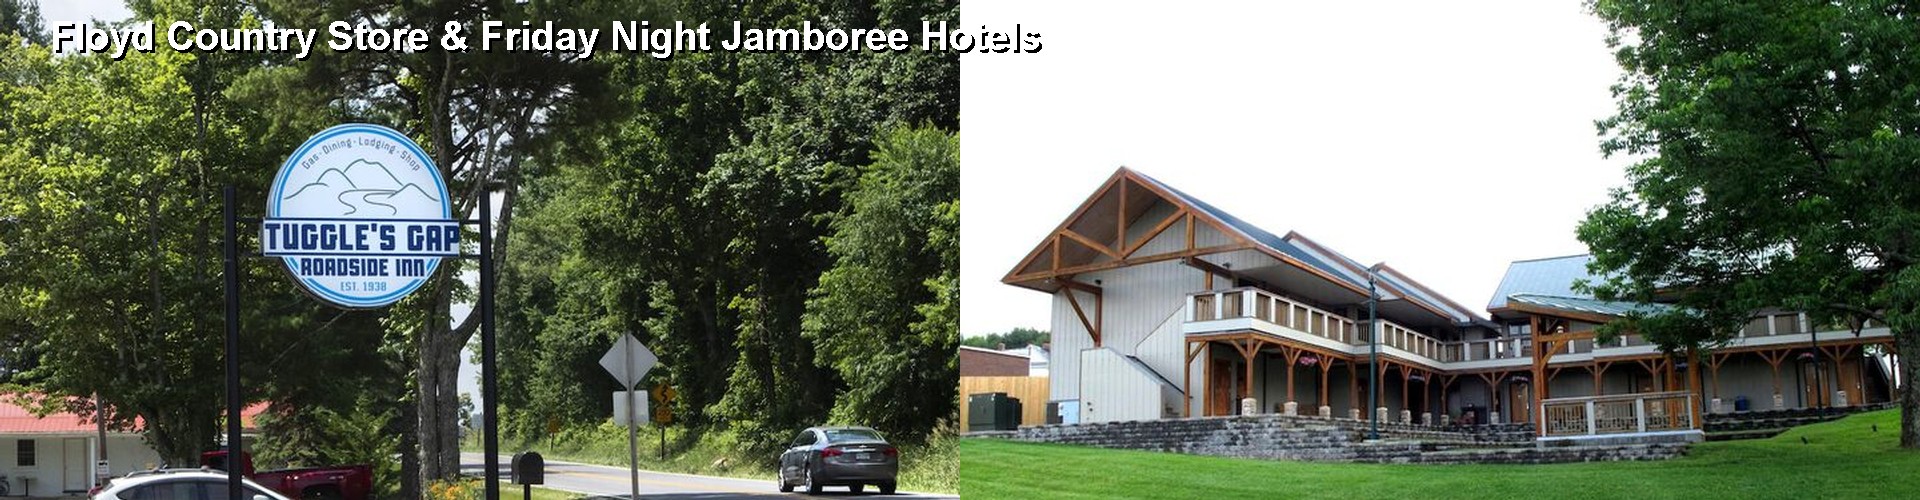 5 Best Hotels near Floyd Country Store & Friday Night Jamboree